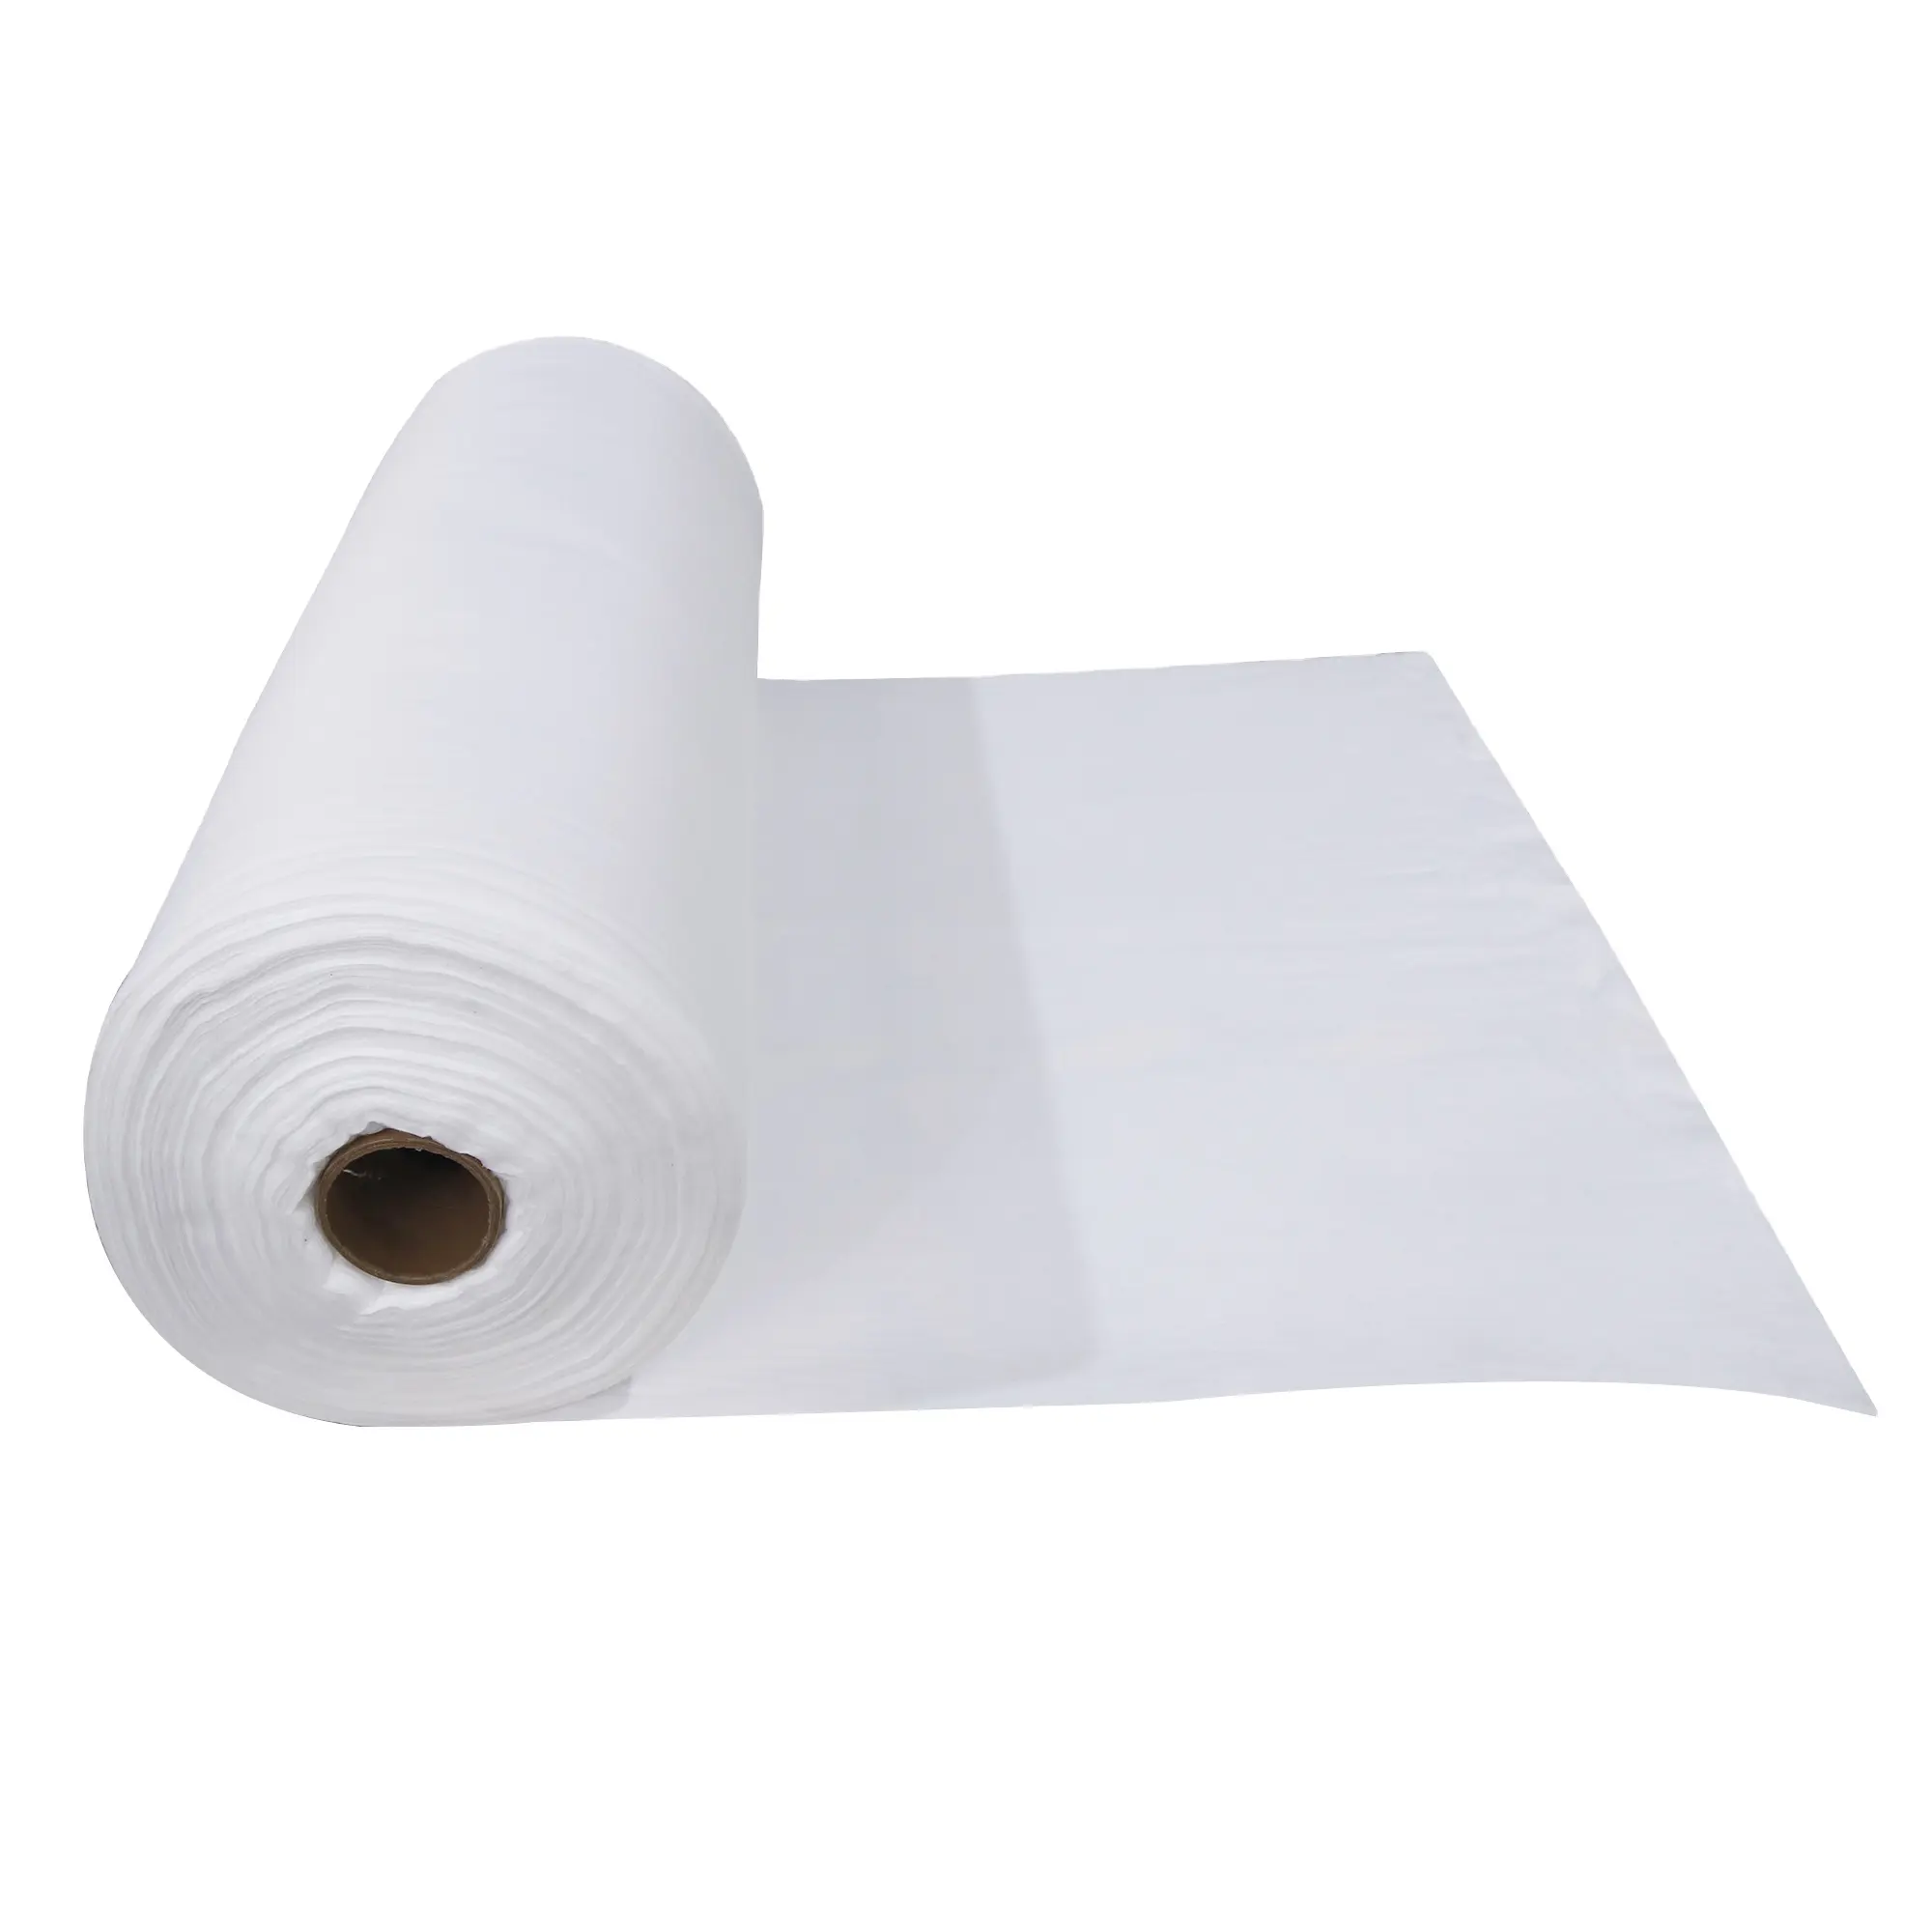 Tela no tejida biodegradable 100% de algodón Spunlace para toallitas húmedas/toallas suaves desechables/almohadillas de algodón